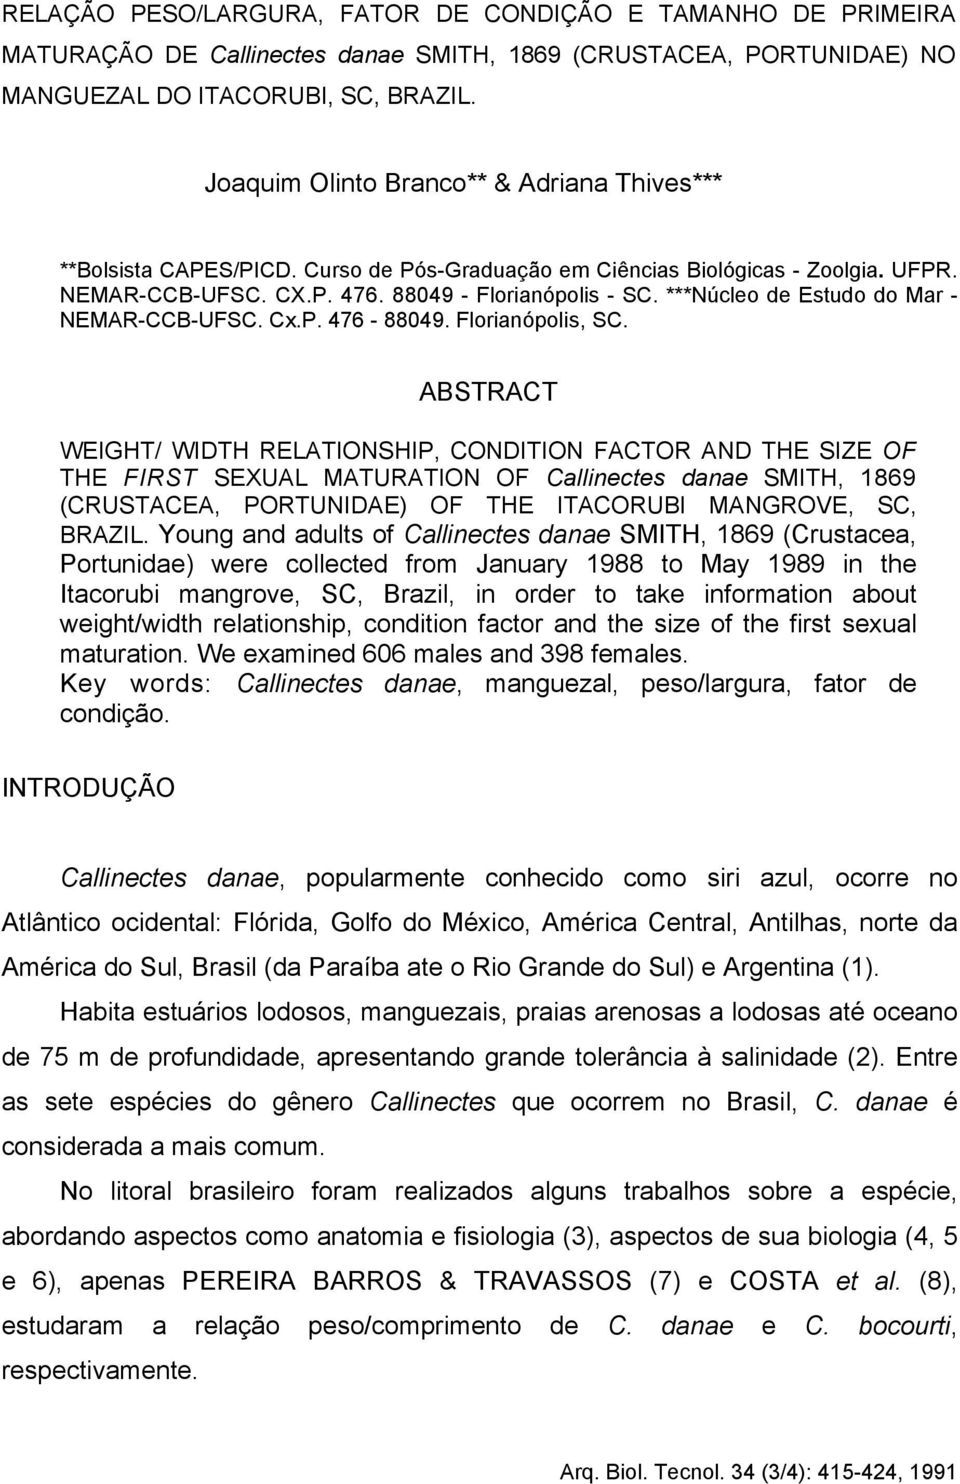 ***Núcleo de Estudo do Mar - NEMAR-CCB-UFSC. Cx.P. 476-88049. Florianópolis, SC.